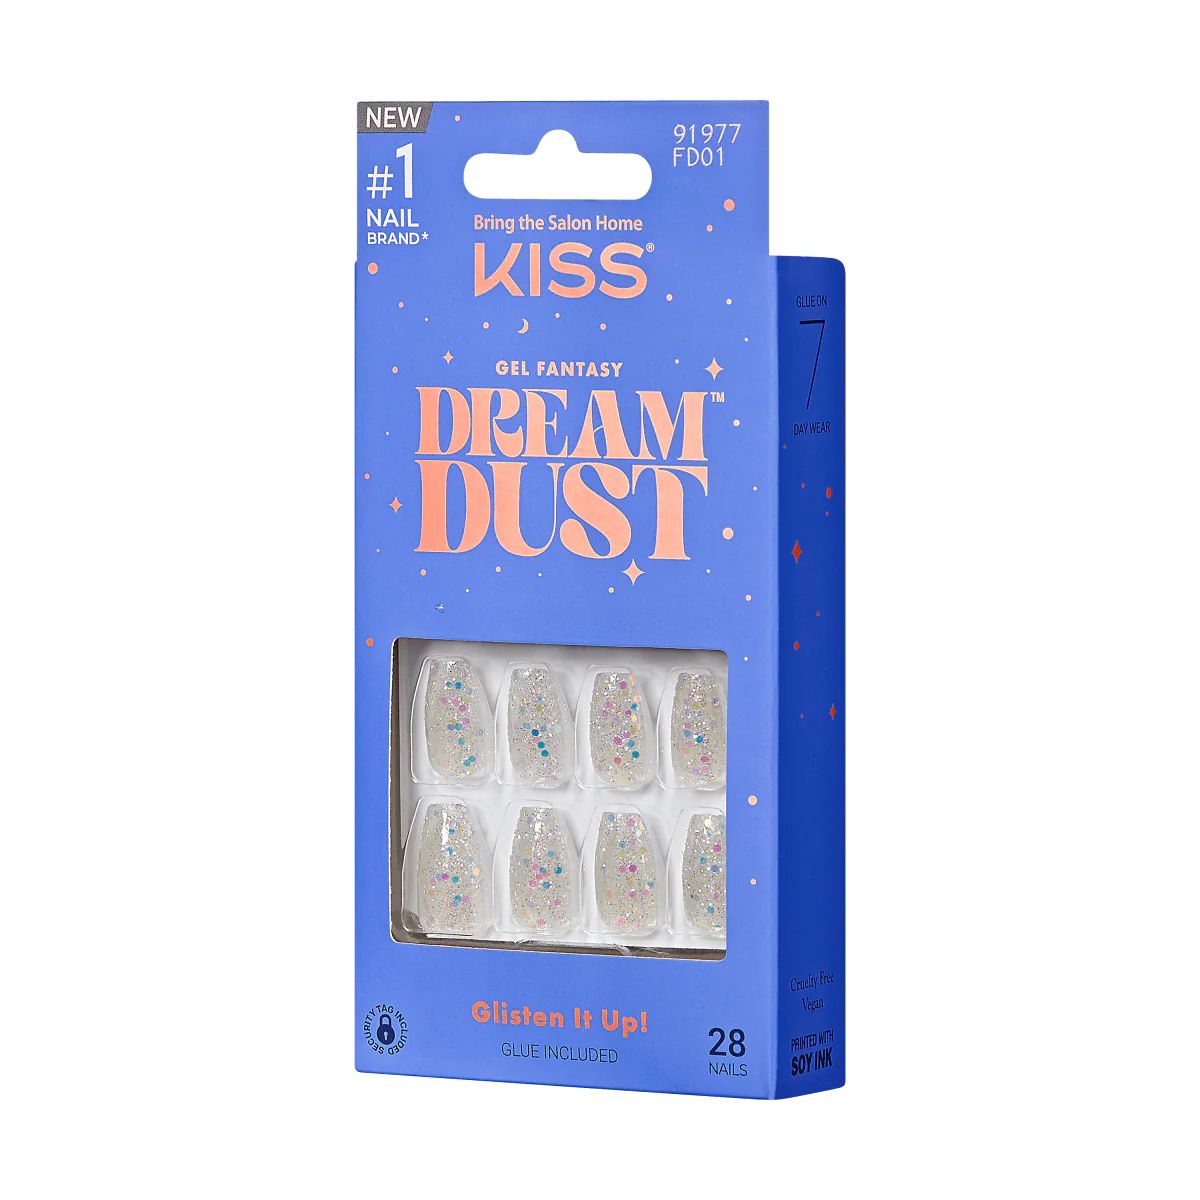 KISS Gel Fantasy Dreamdust Press-On Nails, ‘Mood Dust’, White, Short Coffin, 31 Ct. | KISS, imPRESS, JOAH